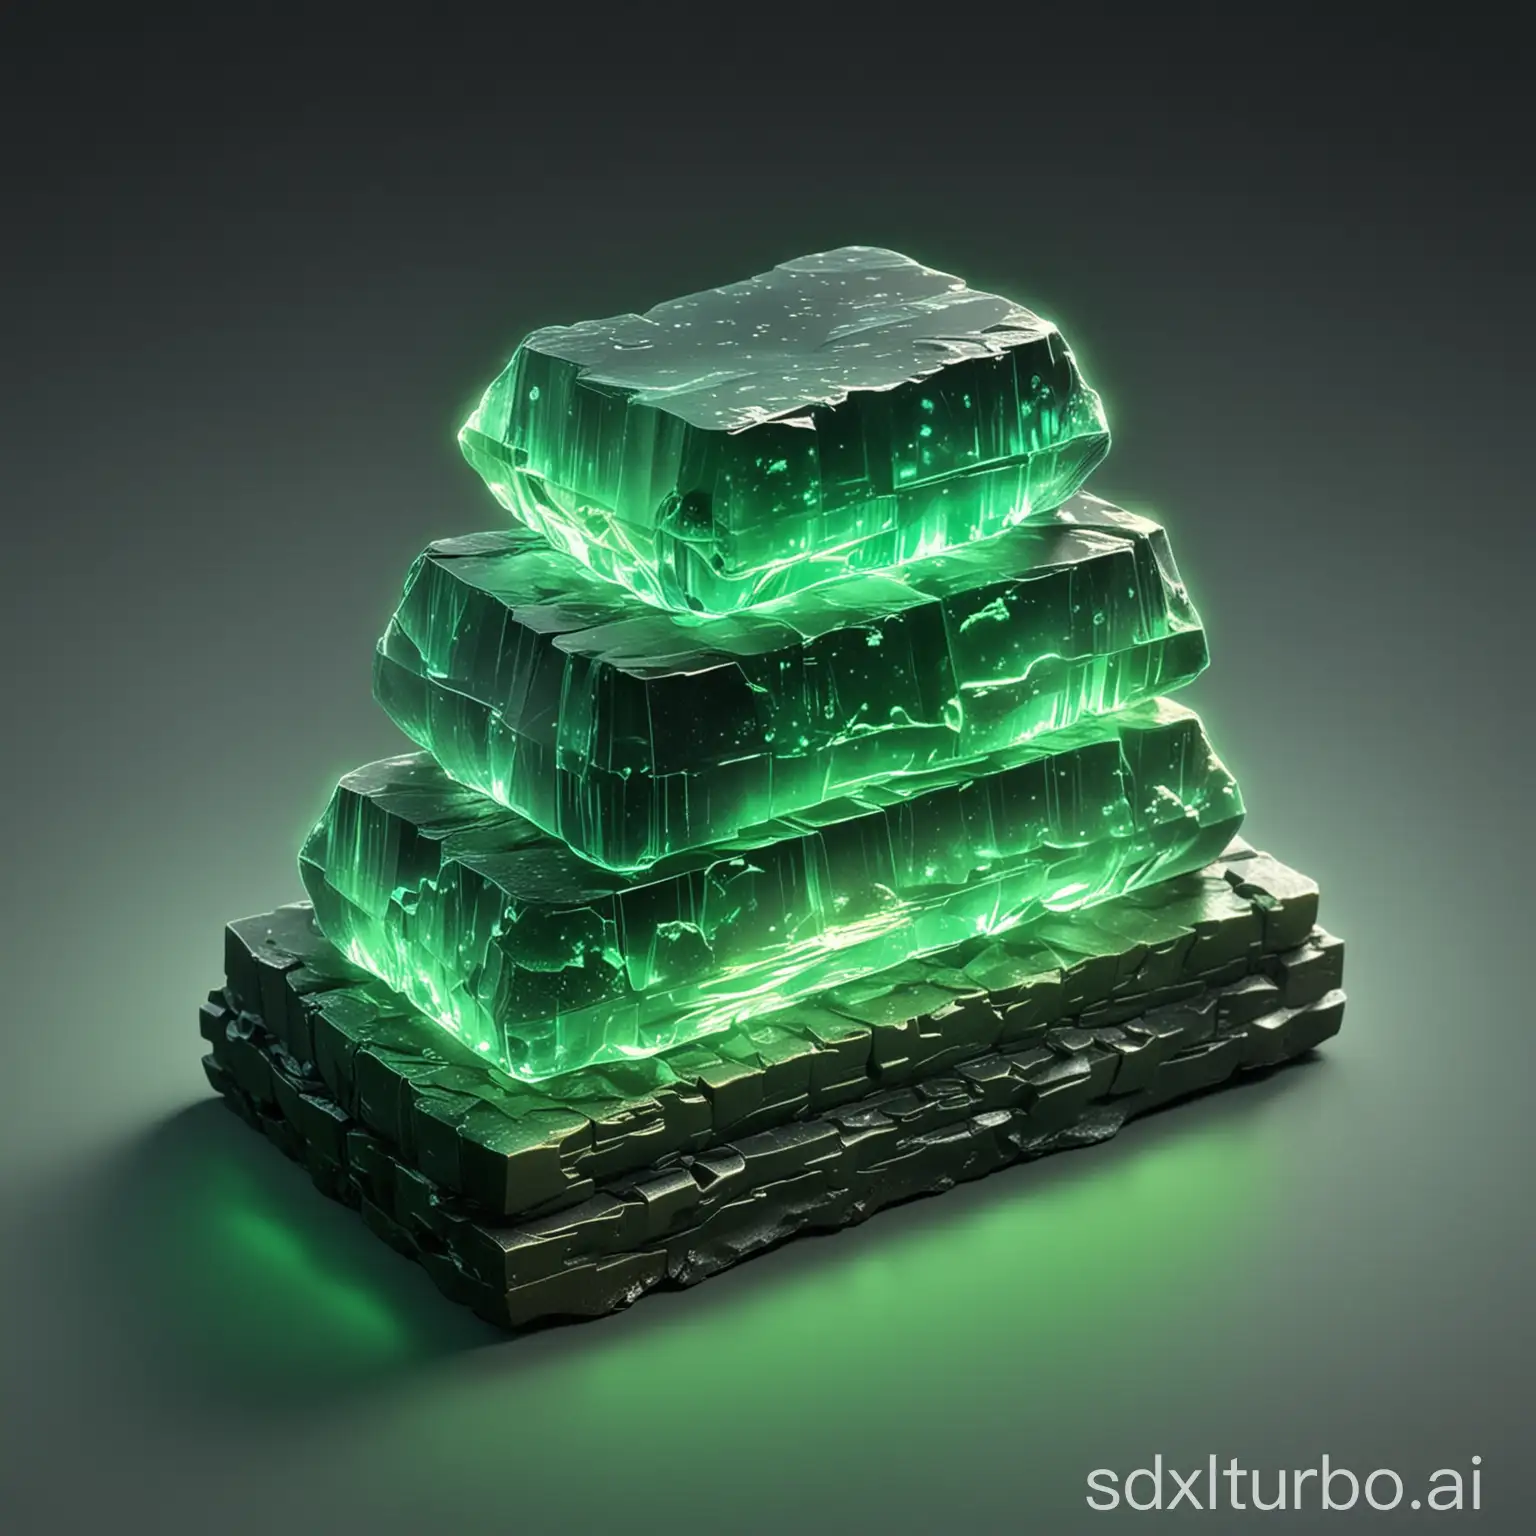  a green glowin crystal ingot stack, 3 ingots staked